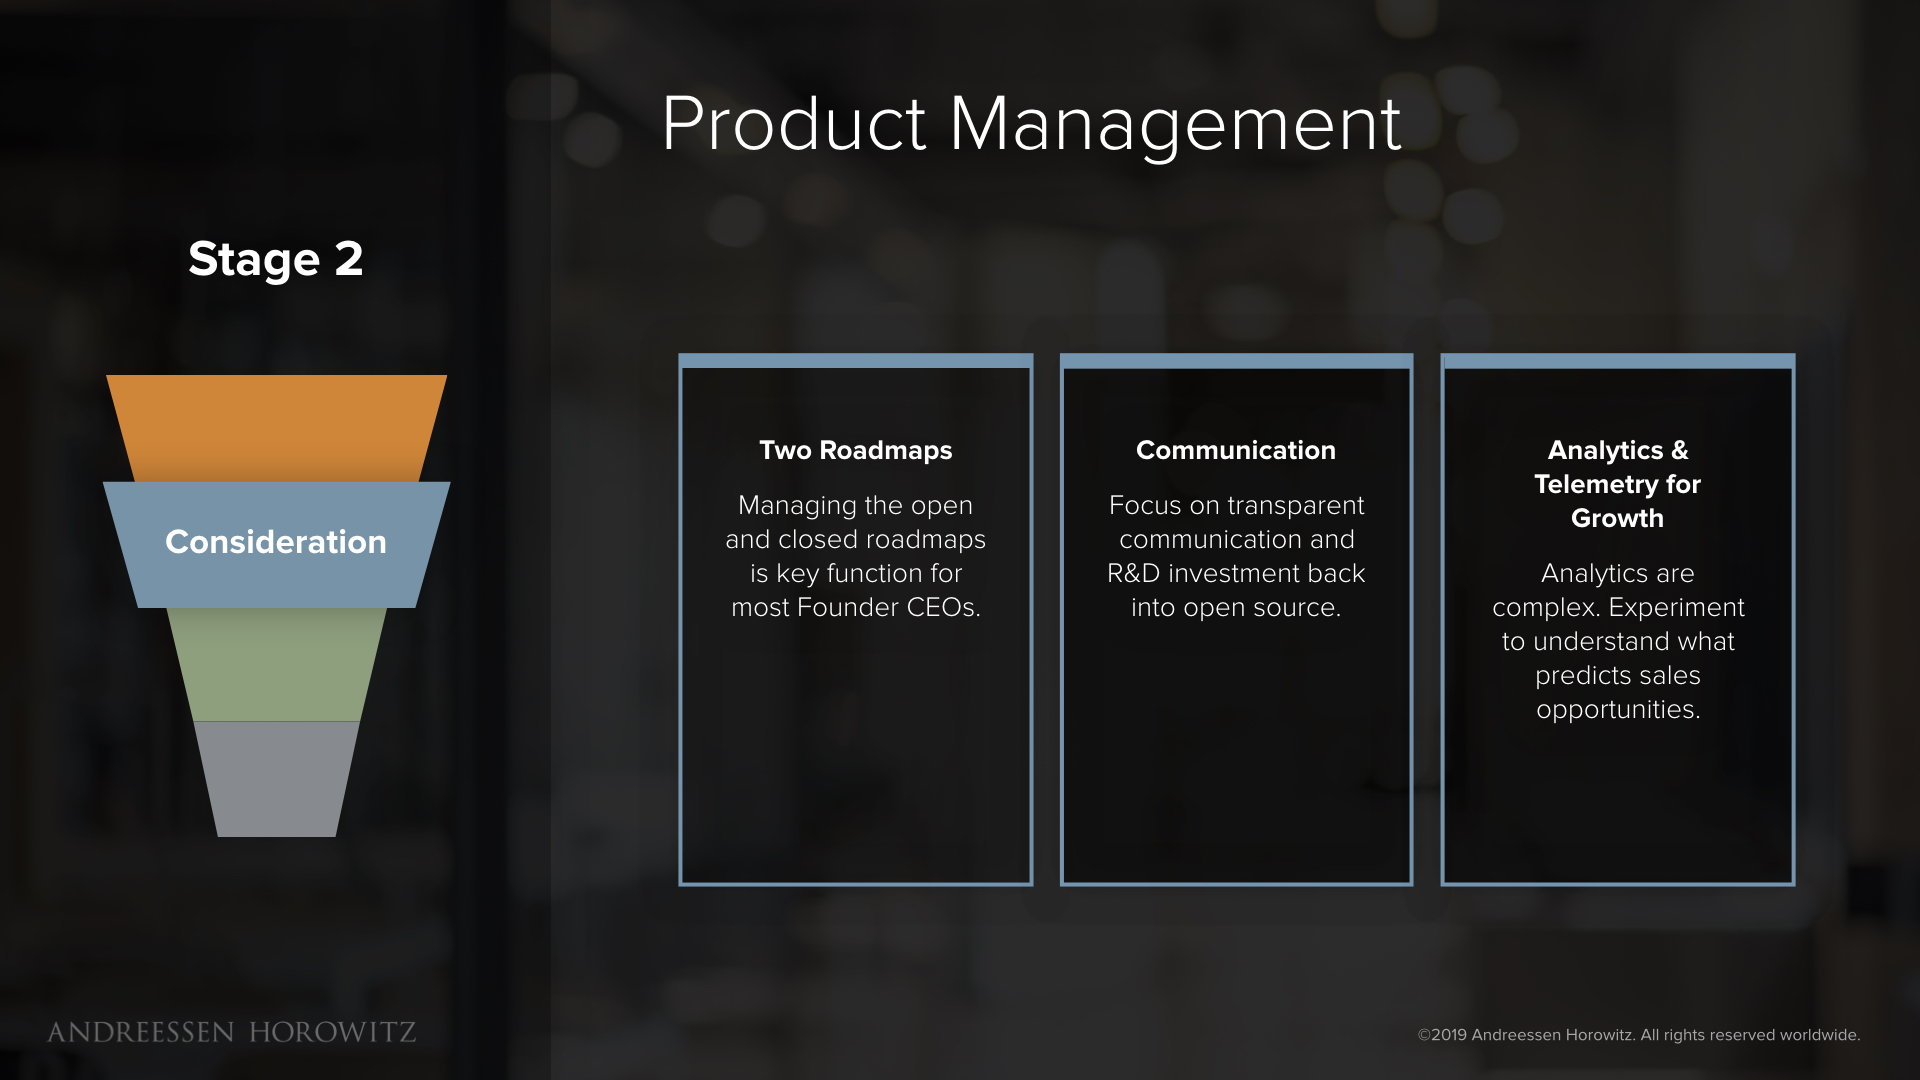 product management